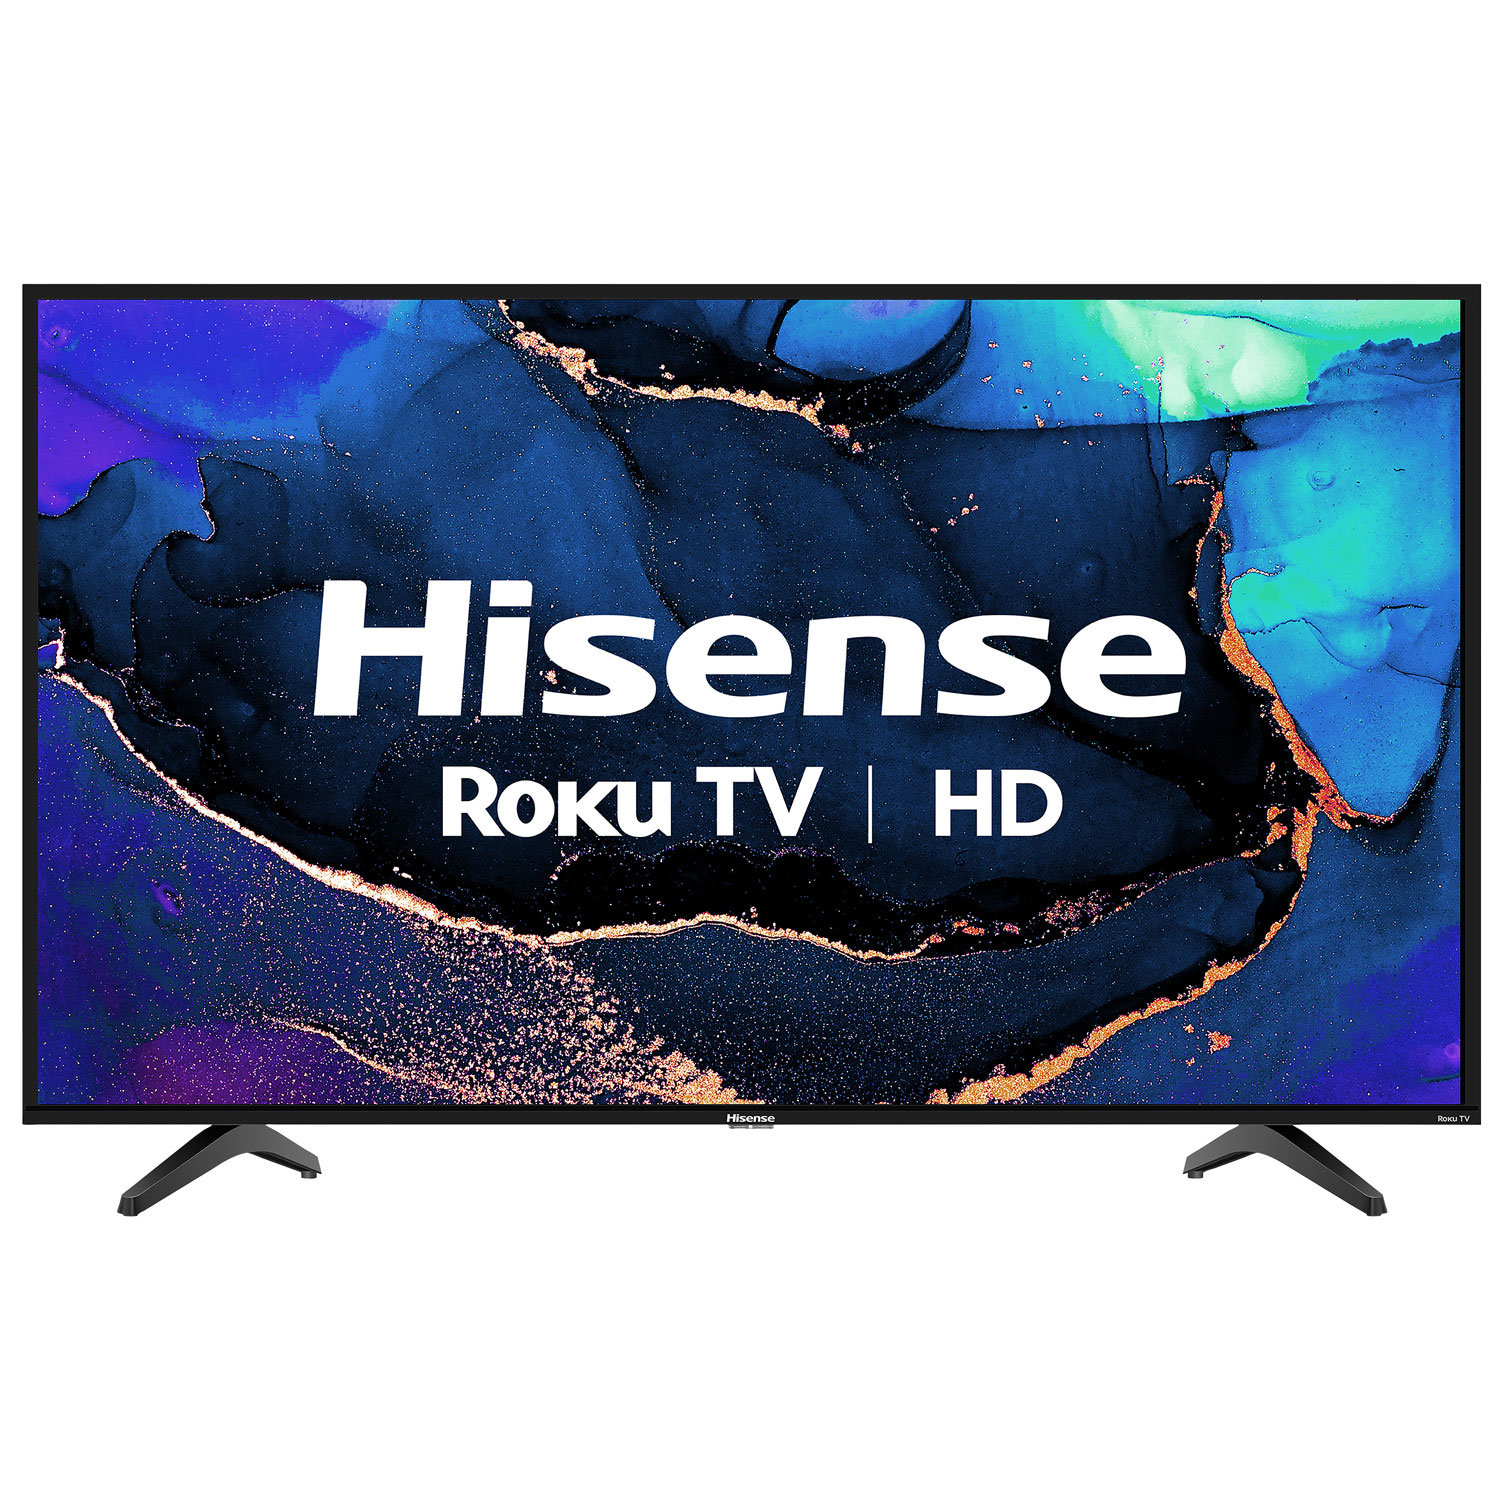 Hisense 32" 720p HD LED Roku Smart TV (32H4G) - 2020